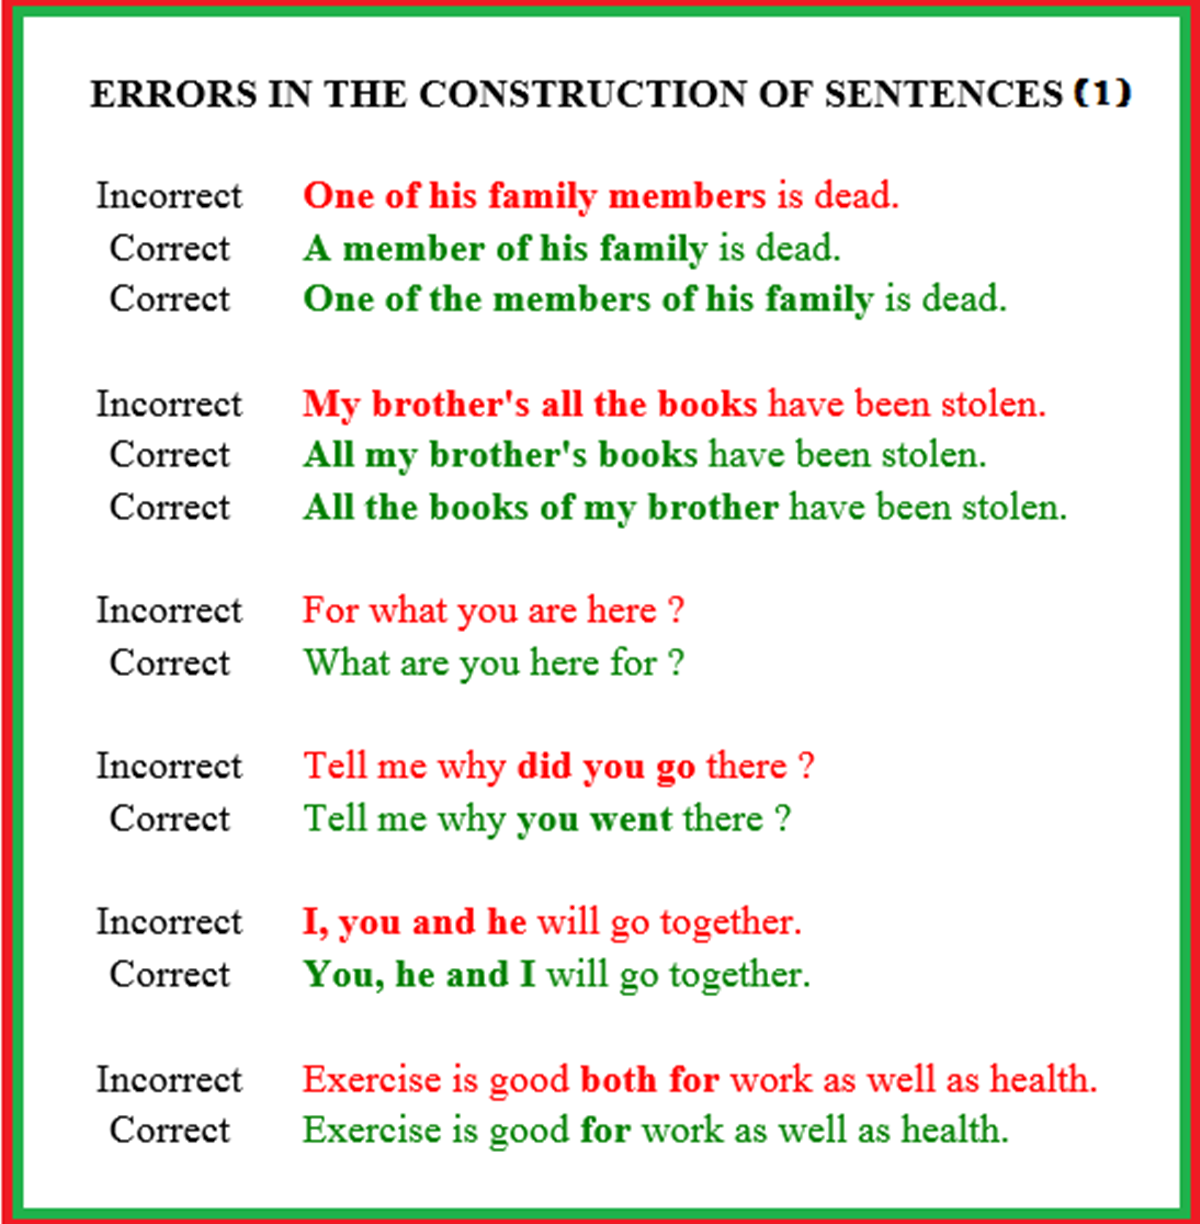 common-errors-in-sentence-construction-sentence-structure-errors-run-2019-02-21